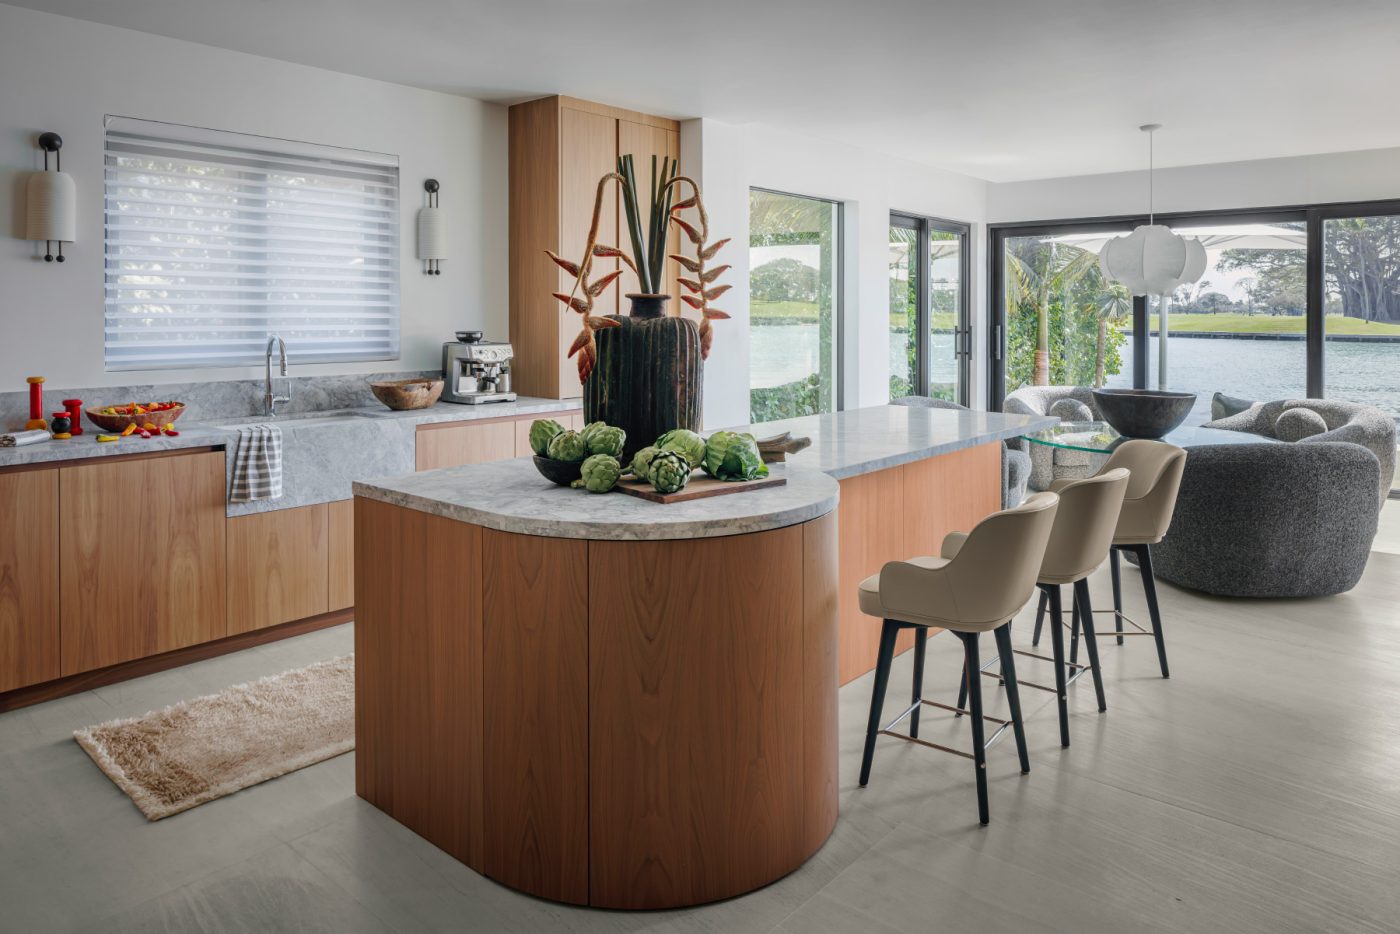 Kitchen of Miami beach home designed by Duett Interiors' Tiffany Thompson 